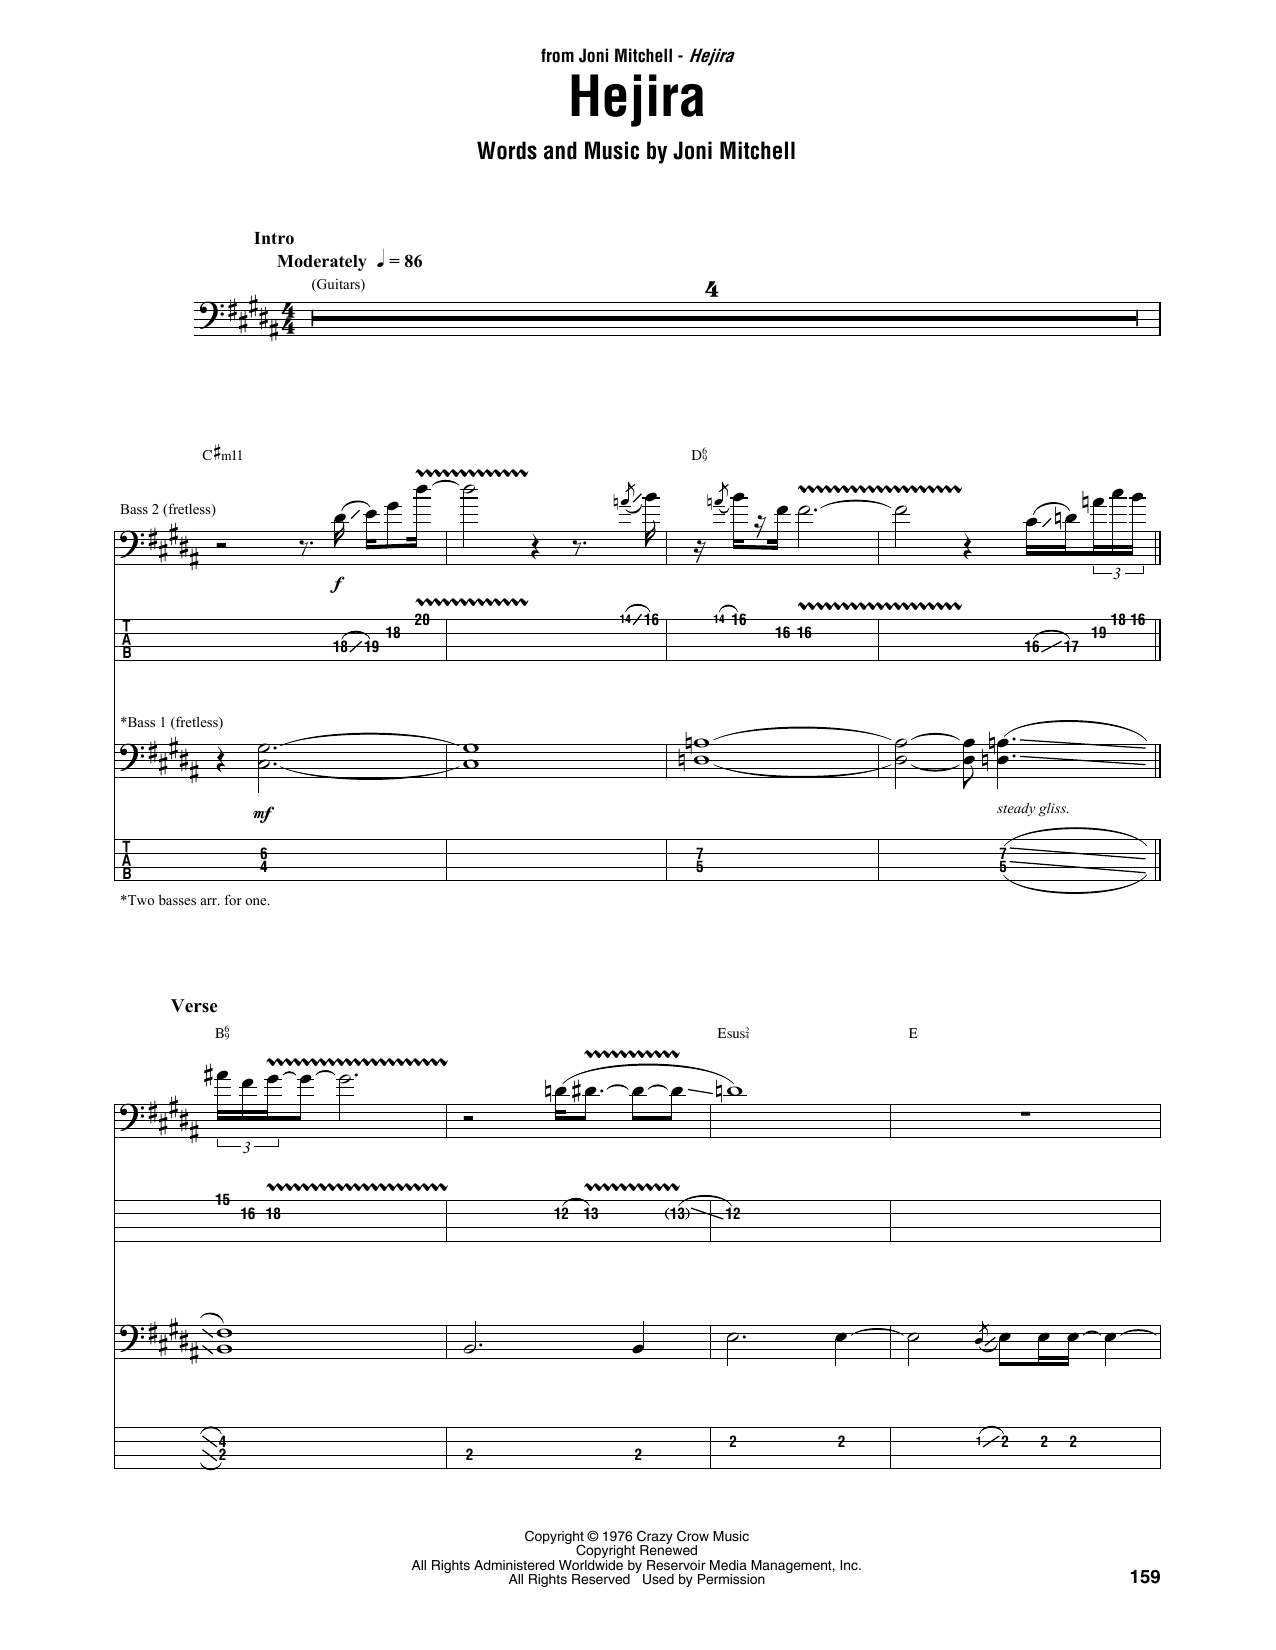 Joni Mitchell Hejira Sheet Music Notes & Chords for Bass Guitar Tab - Download or Print PDF